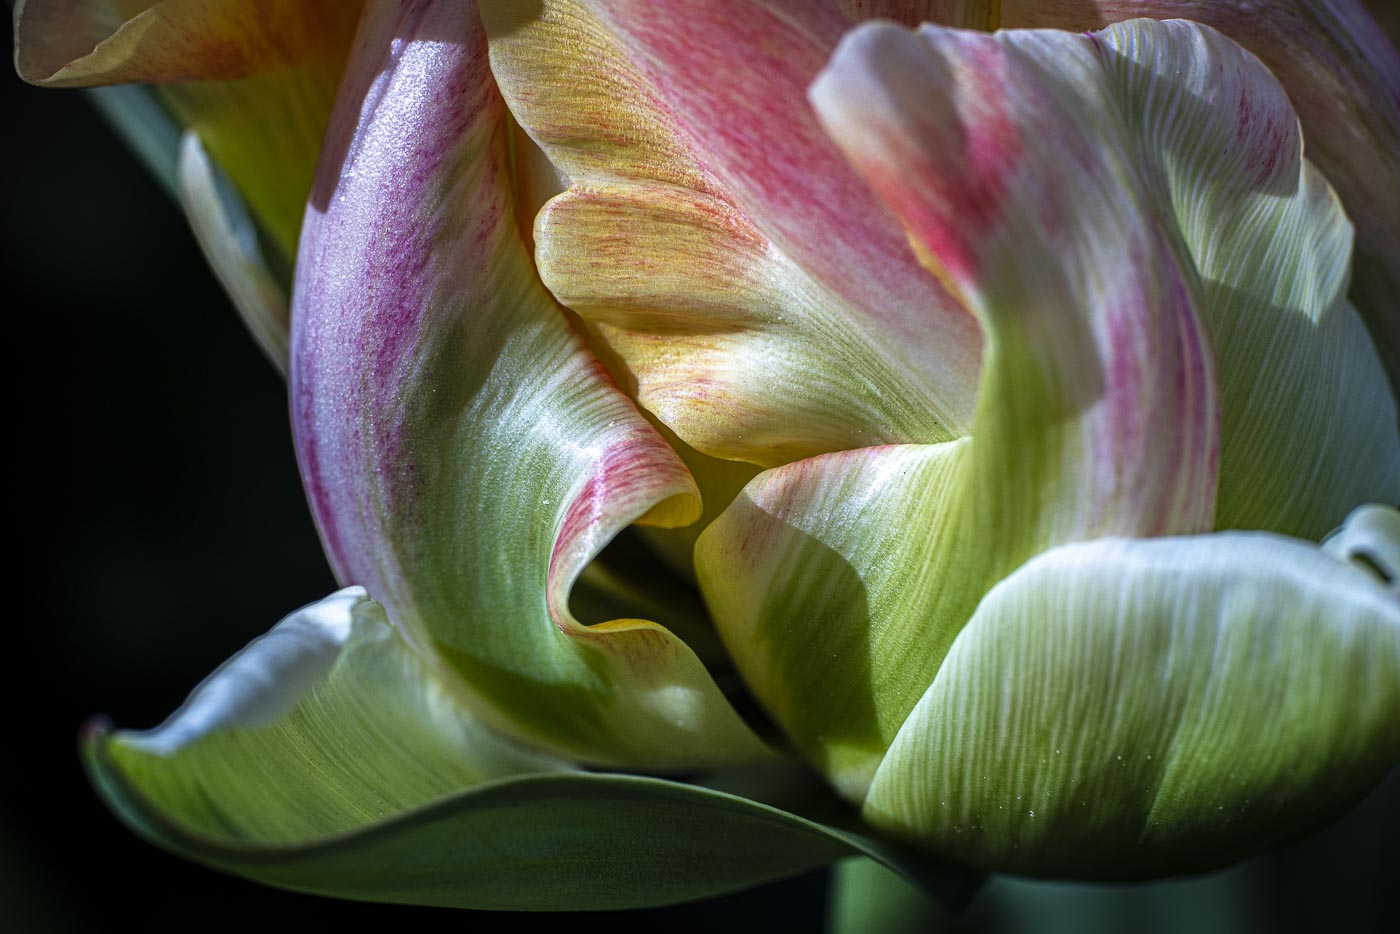 Parrot Tulip Revealing Itself
Archival Digital Print